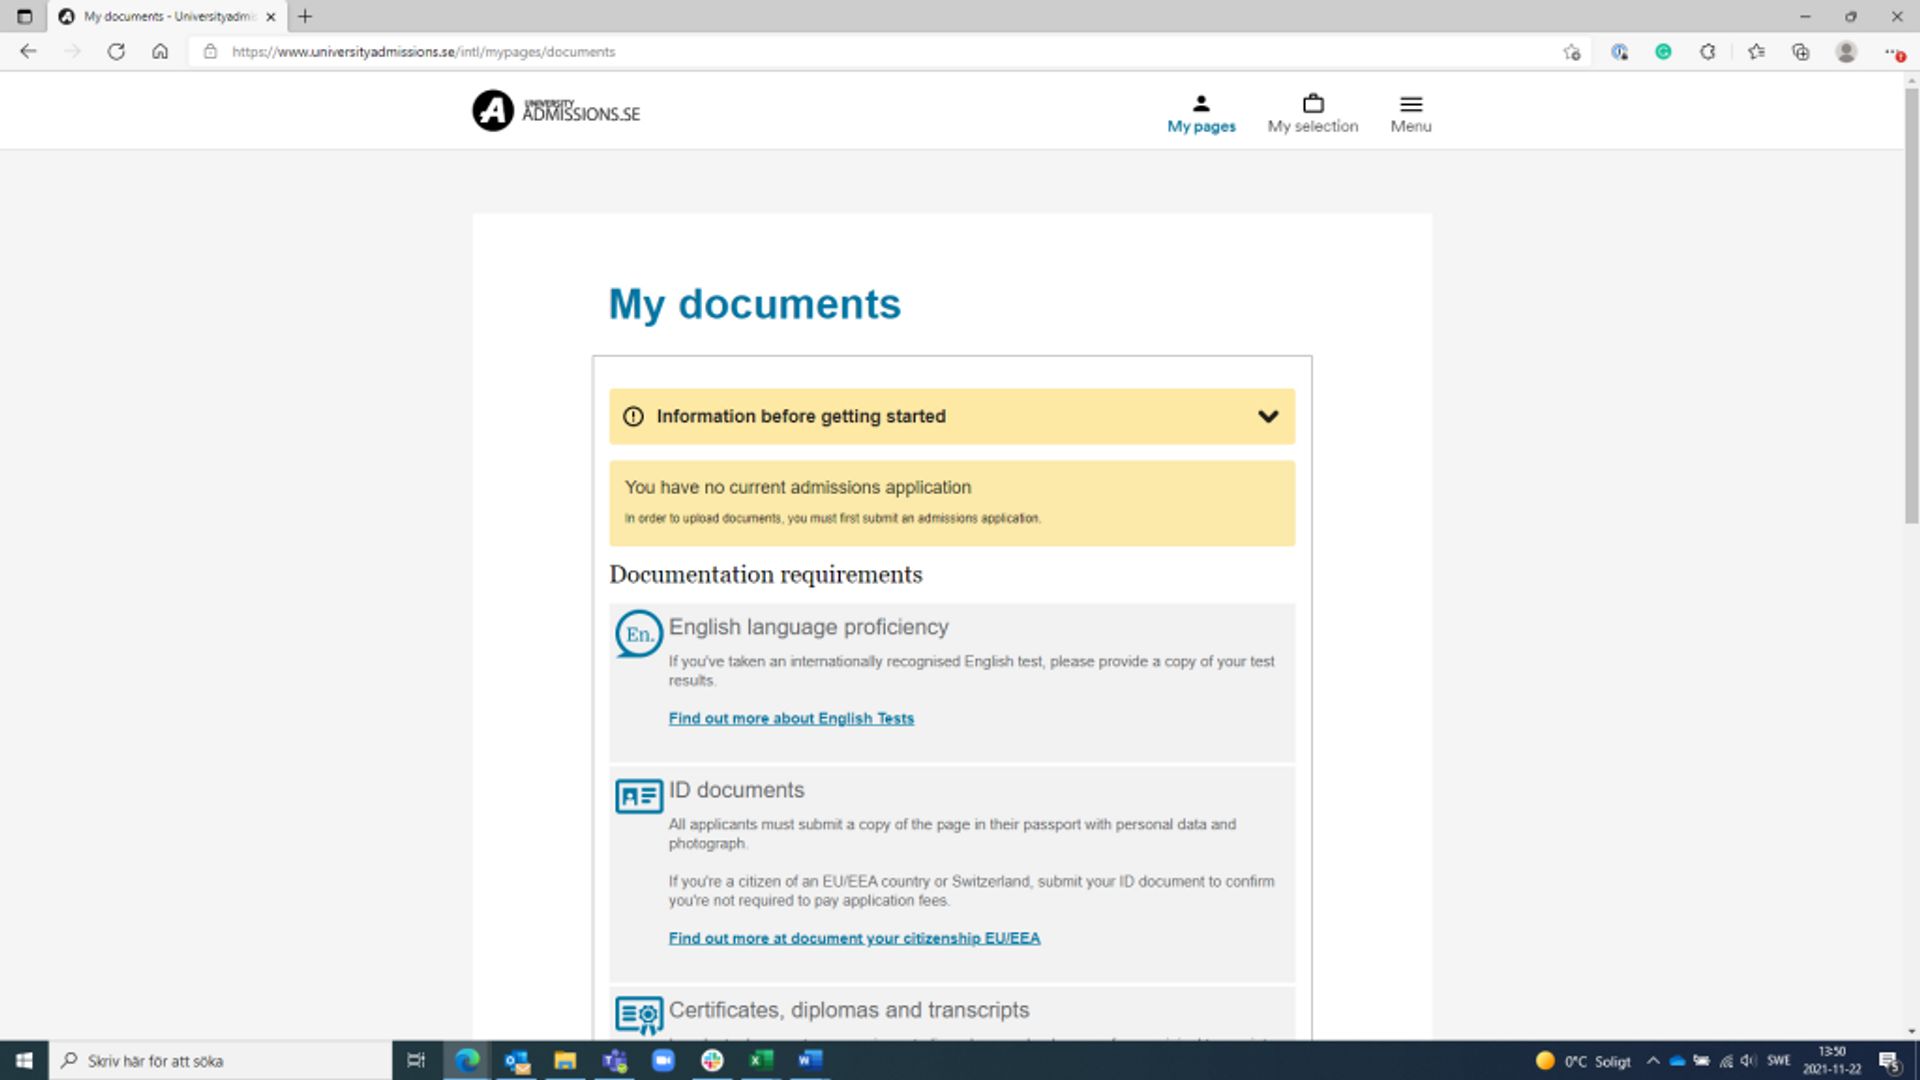 Screenshot of instructions for uploading documents,